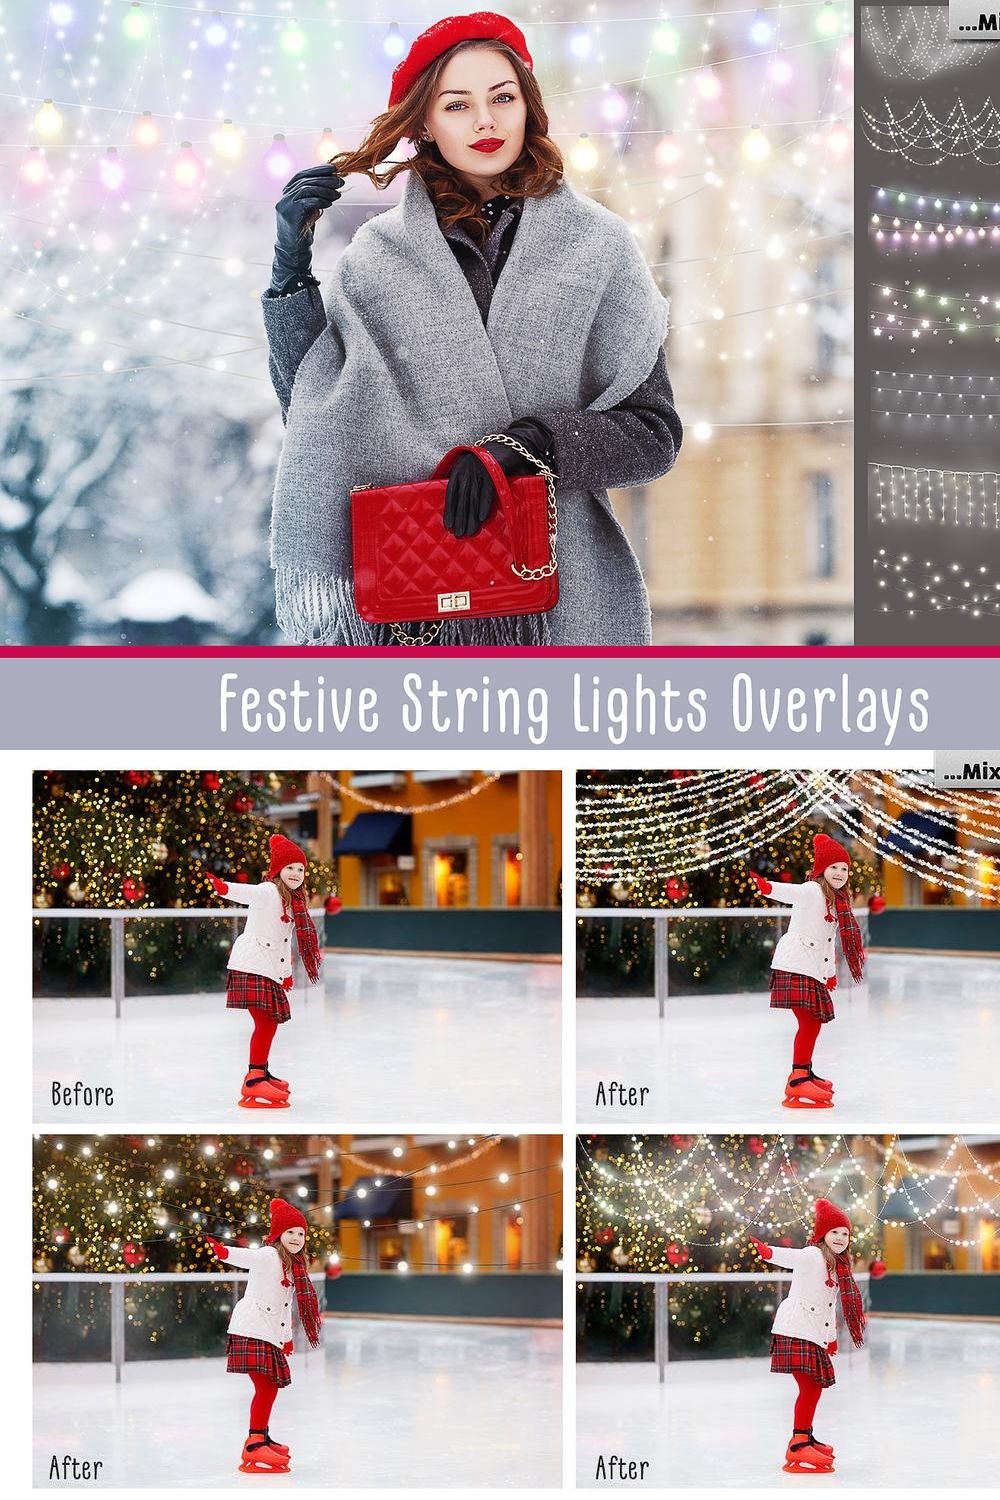 Festive String Lights Overlays pinterest preview image.